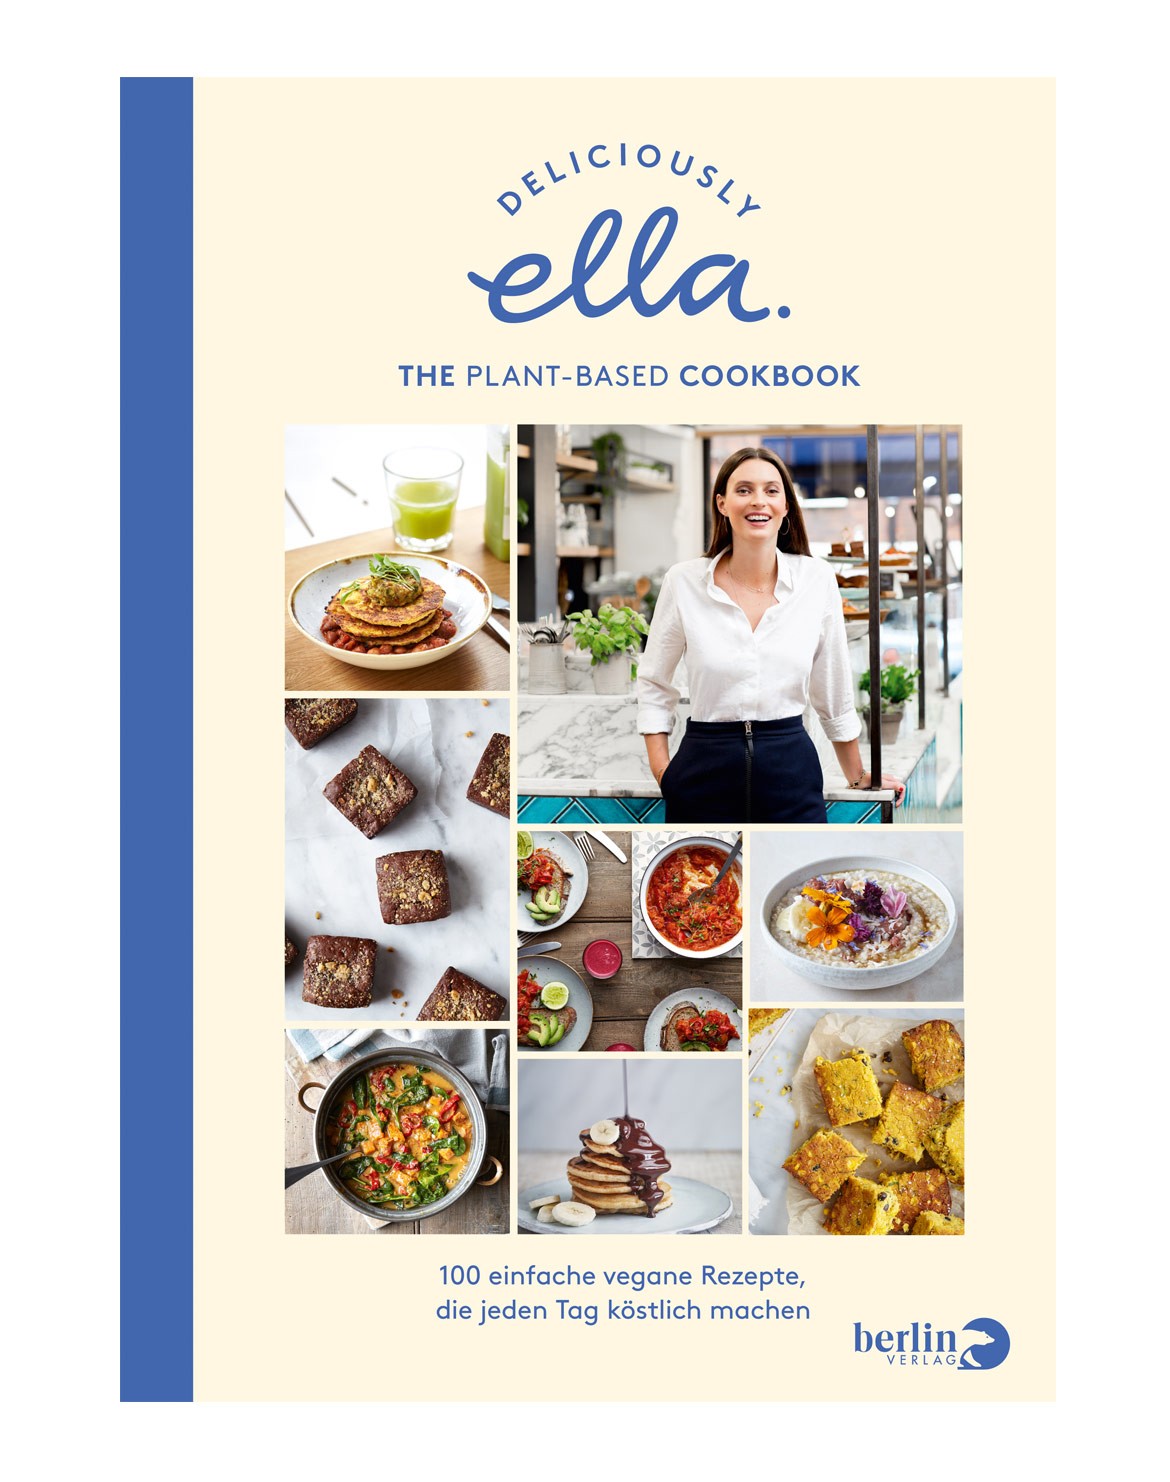 Deliciously Ella The Plant-Based Cookbook